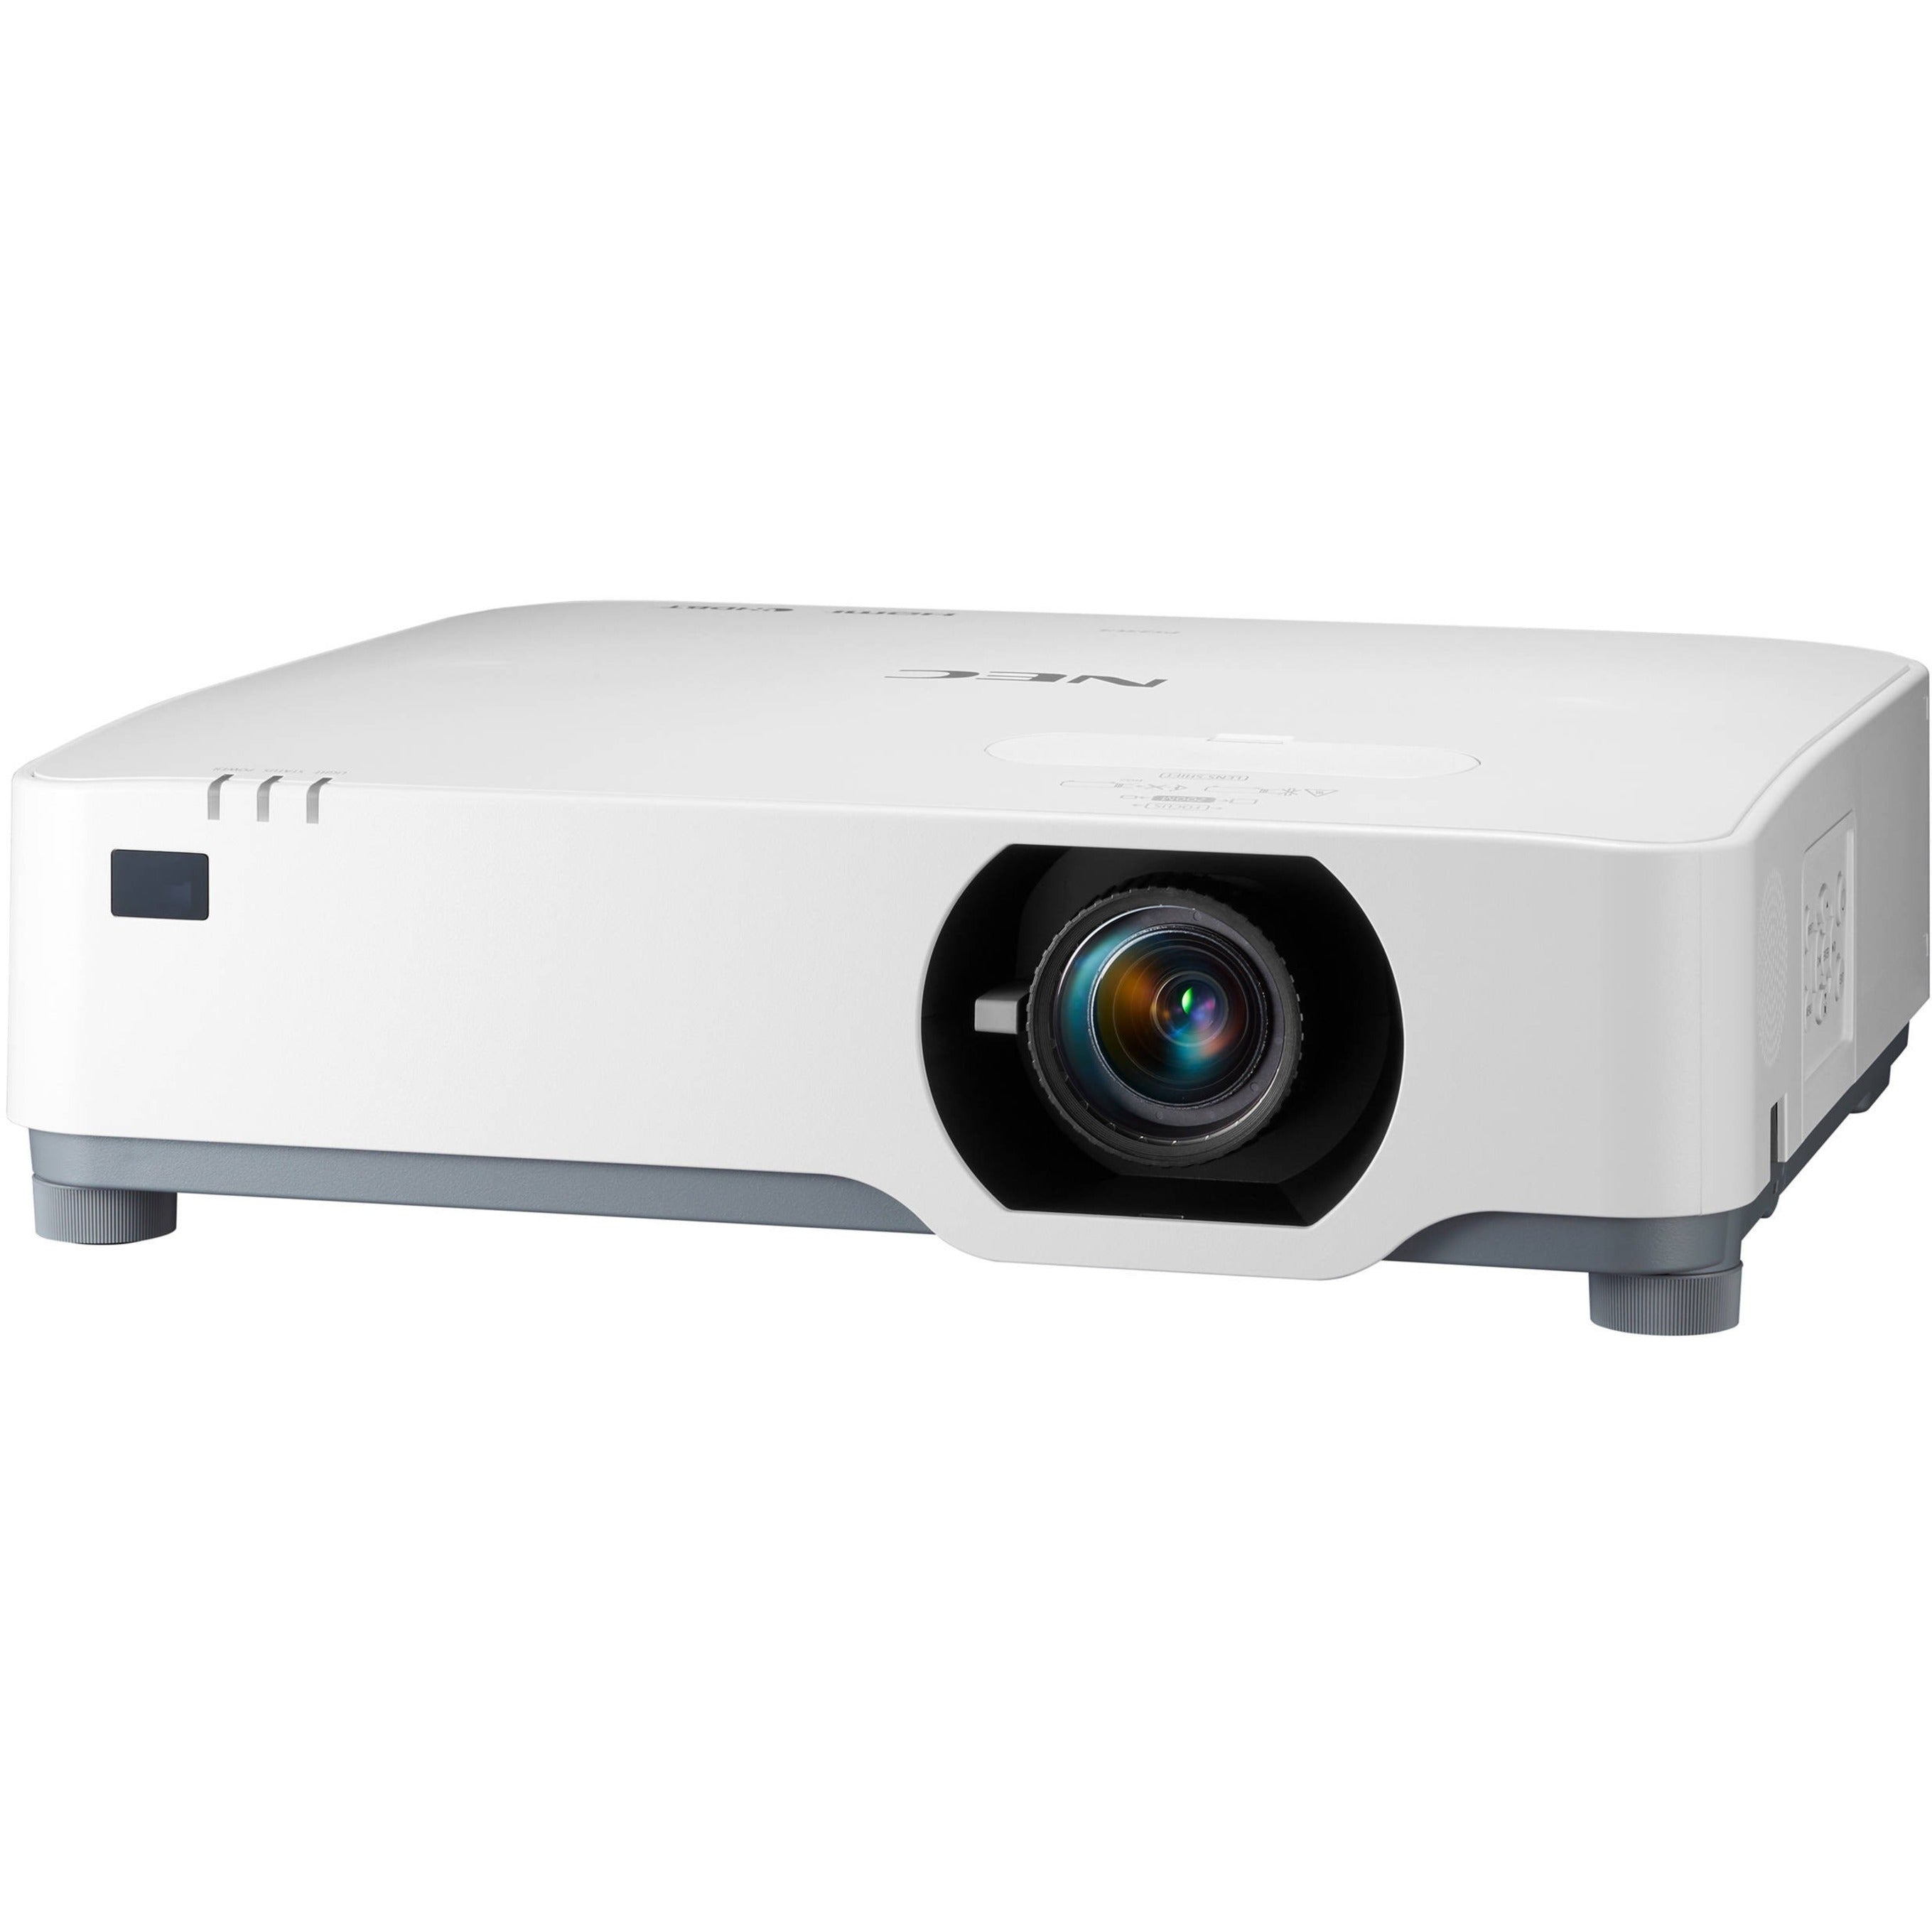 NEC Display NP-P605UL 6,000 Lumen WUXGA LCD Laser Entry Installation Projector, 16:10